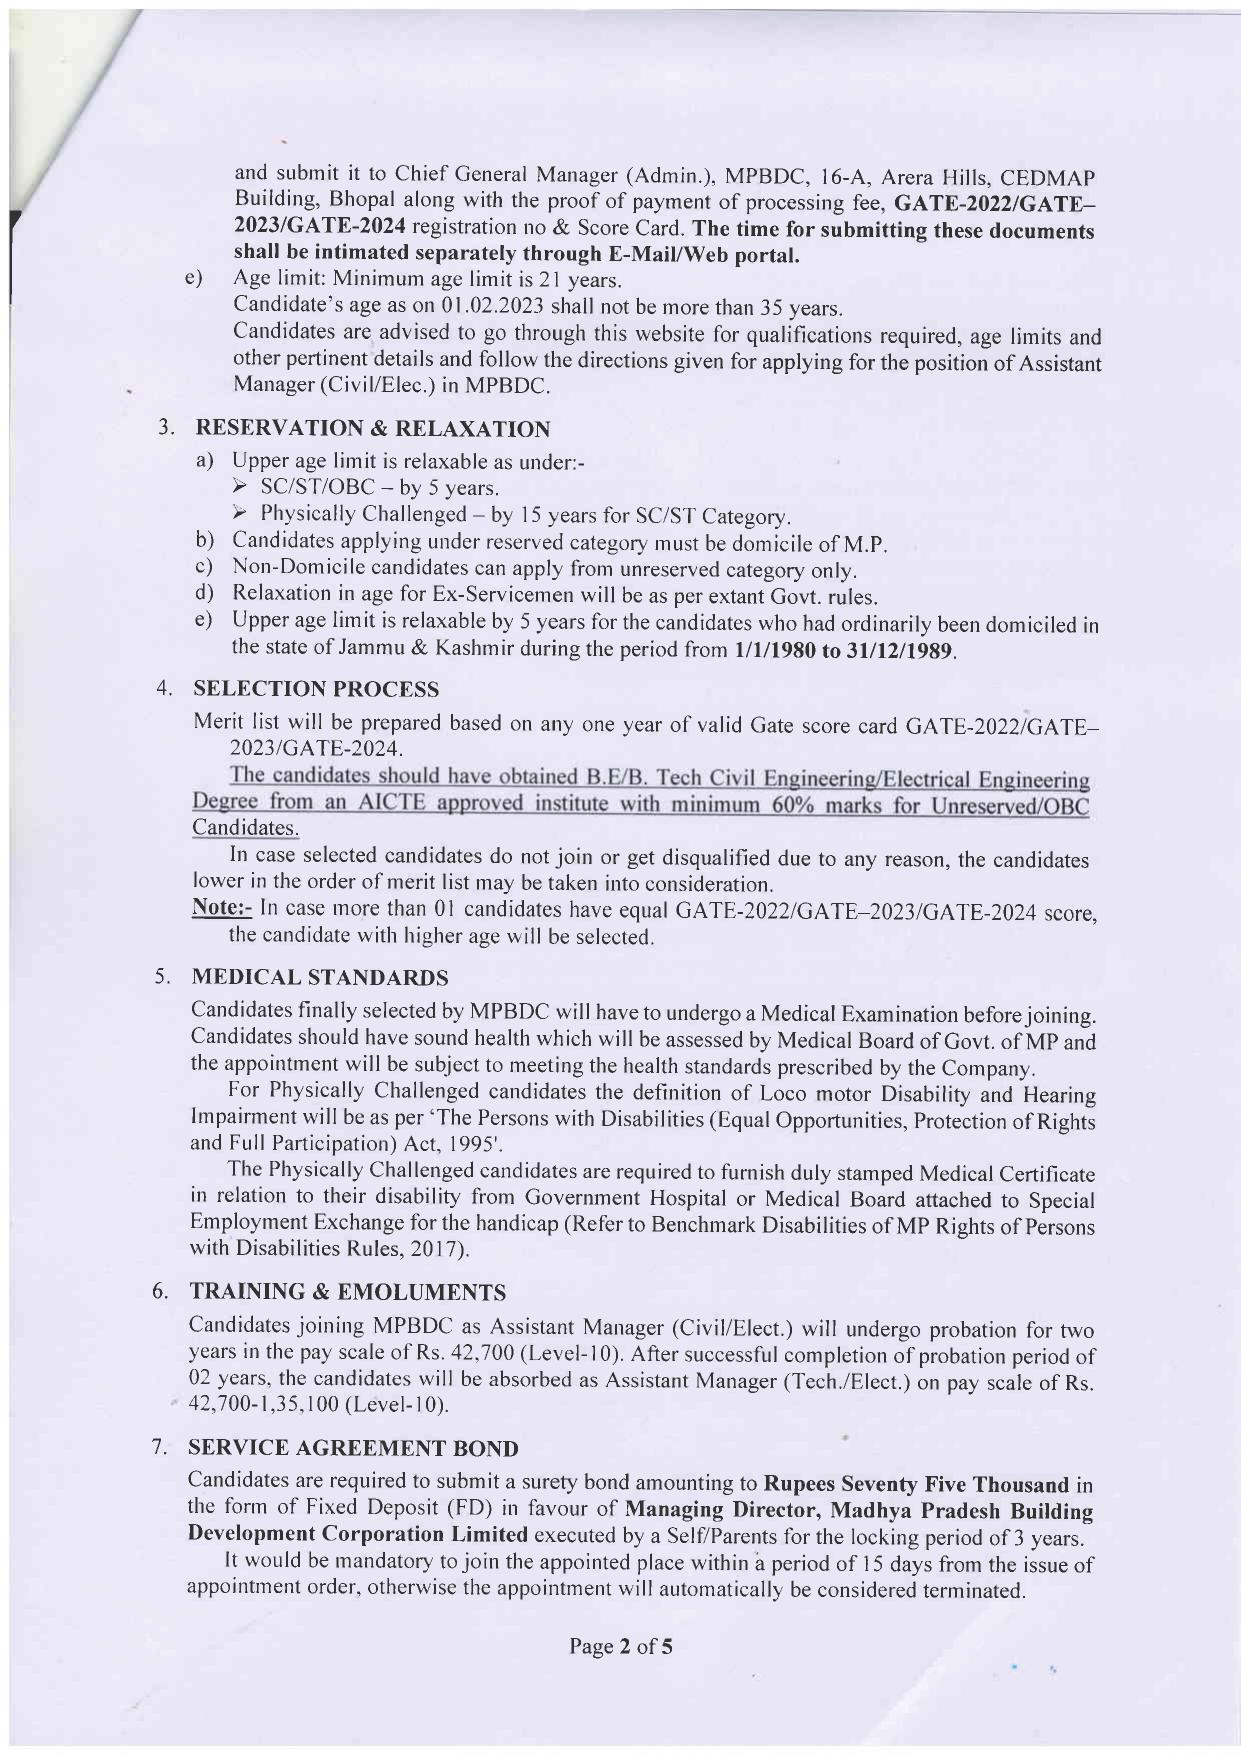 Madhya Pradesh Building Development Corporation (MPBDC) Assistant Manager Recruitment 2024 - Page 2